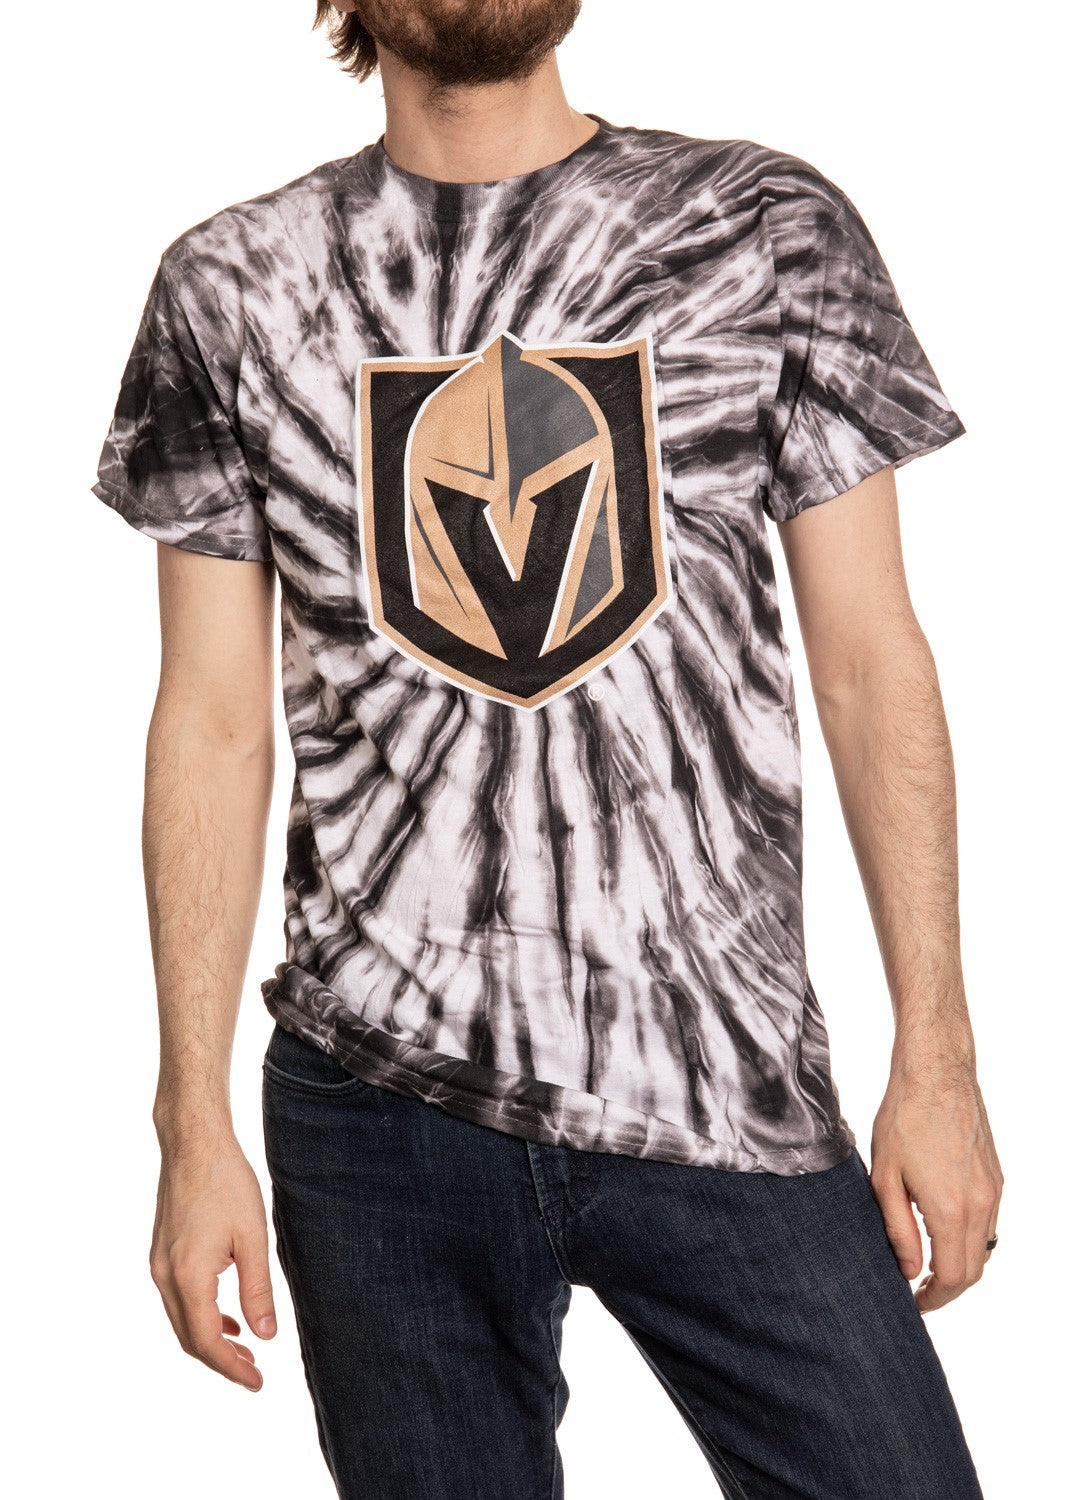 Vegas Golden Knights Black Spiral Tie Dye T-Shirt Front View